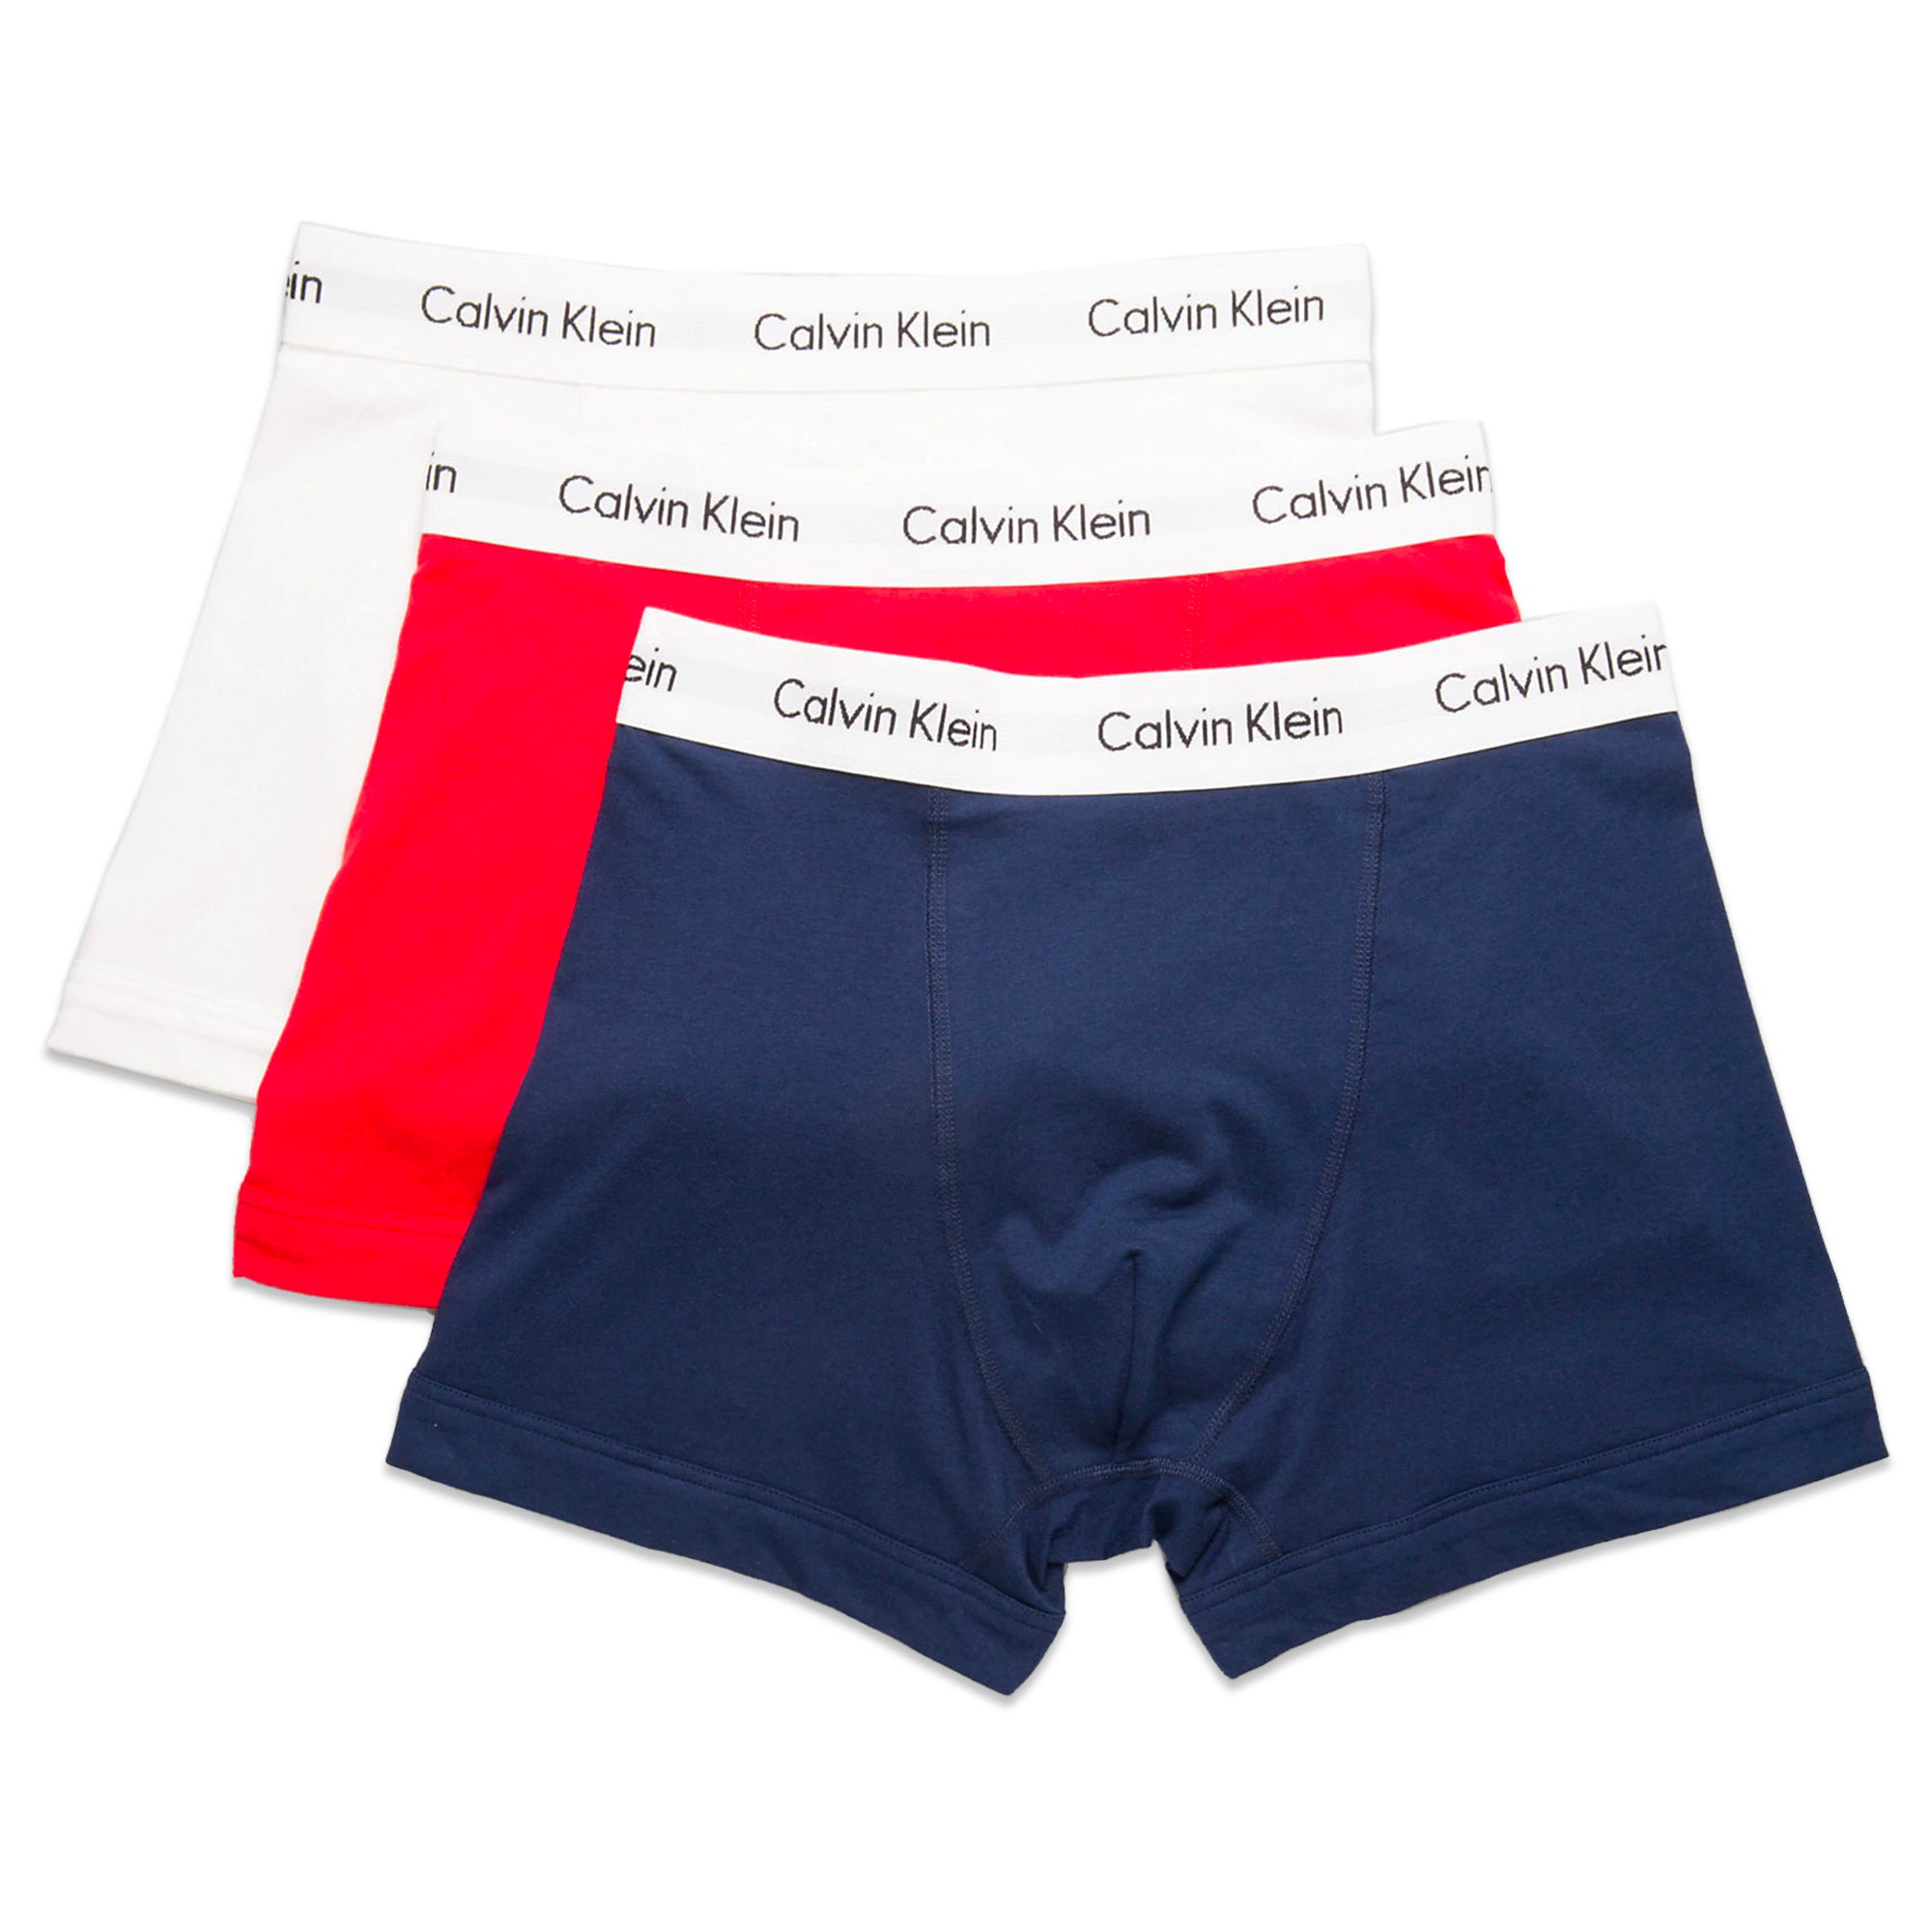 Calvin Klein Cotton Stretch Trunks - Navy/White/Red - Arena Menswear